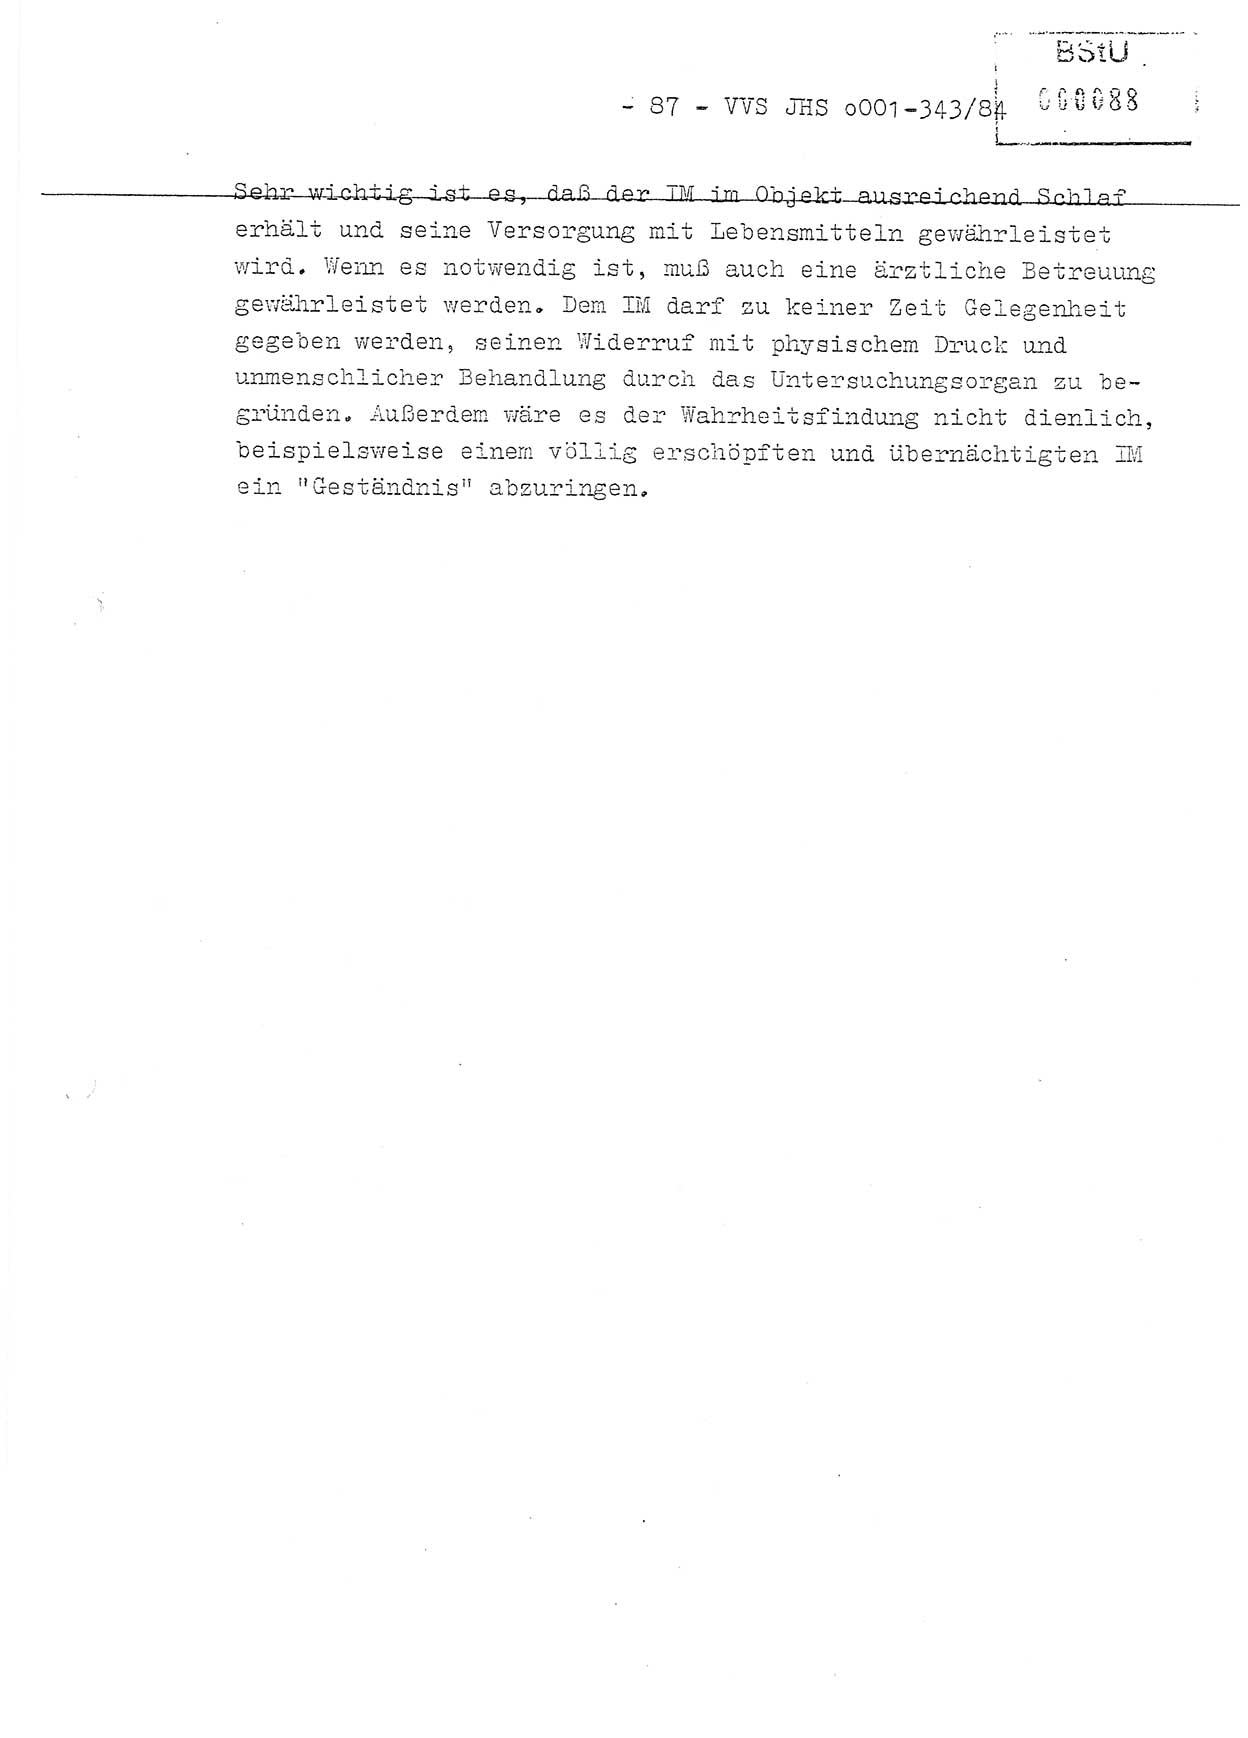 Diplomarbeit, Oberleutnant Bernd Michael (HA Ⅸ/5), Oberleutnant Peter Felber (HA IX/5), Ministerium für Staatssicherheit (MfS) [Deutsche Demokratische Republik (DDR)], Juristische Hochschule (JHS), Vertrauliche Verschlußsache (VVS) o001-343/84, Potsdam 1985, Seite 87 (Dipl.-Arb. MfS DDR JHS VVS o001-343/84 1985, S. 87)